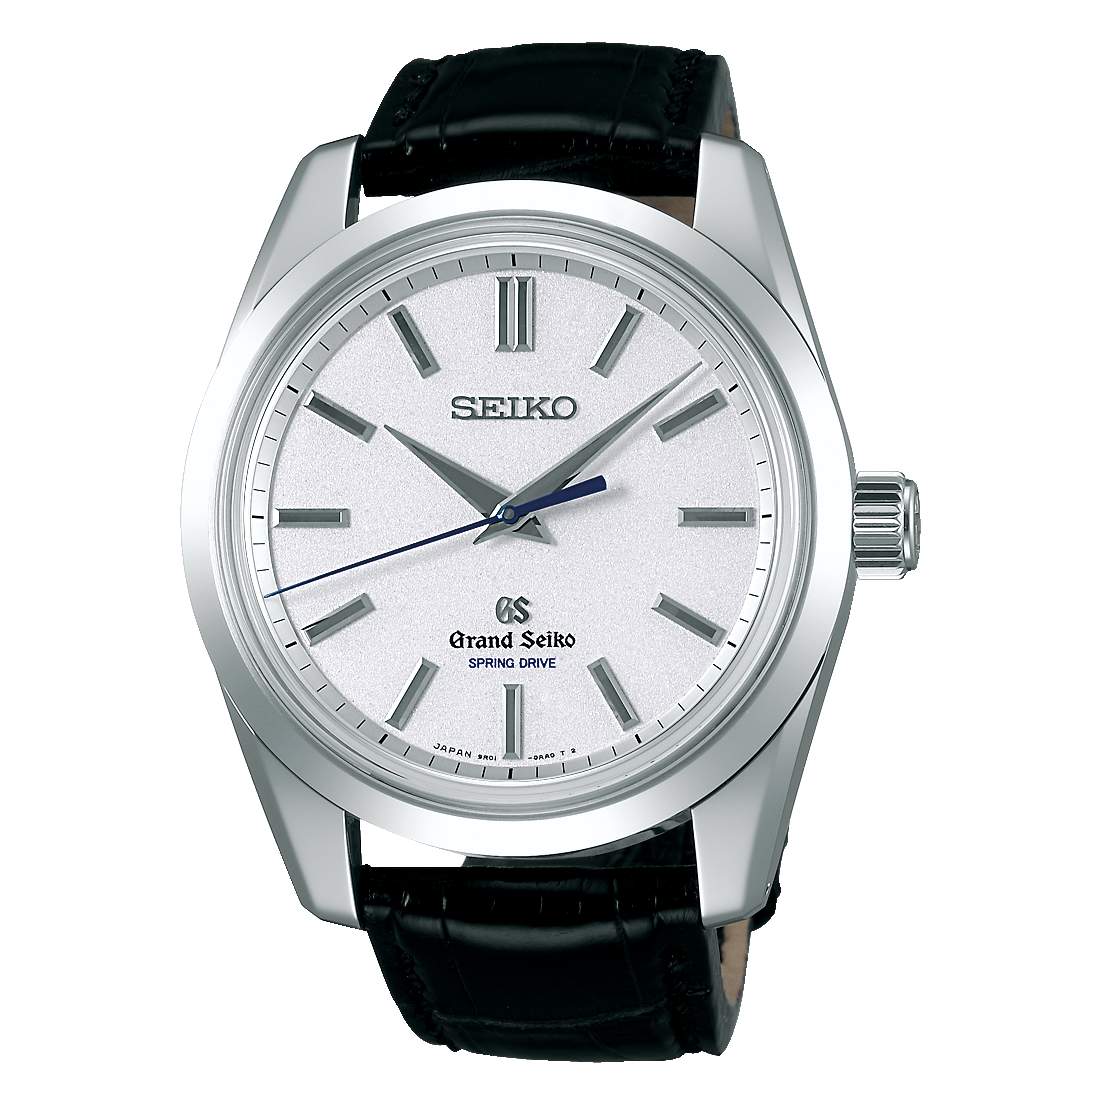 Seiko часы браслеты. Часы Seiko 7826 3100. Grand Seiko браслет. Seiko holdings Corporation (англ.). Ремешок Гранд Сейко.